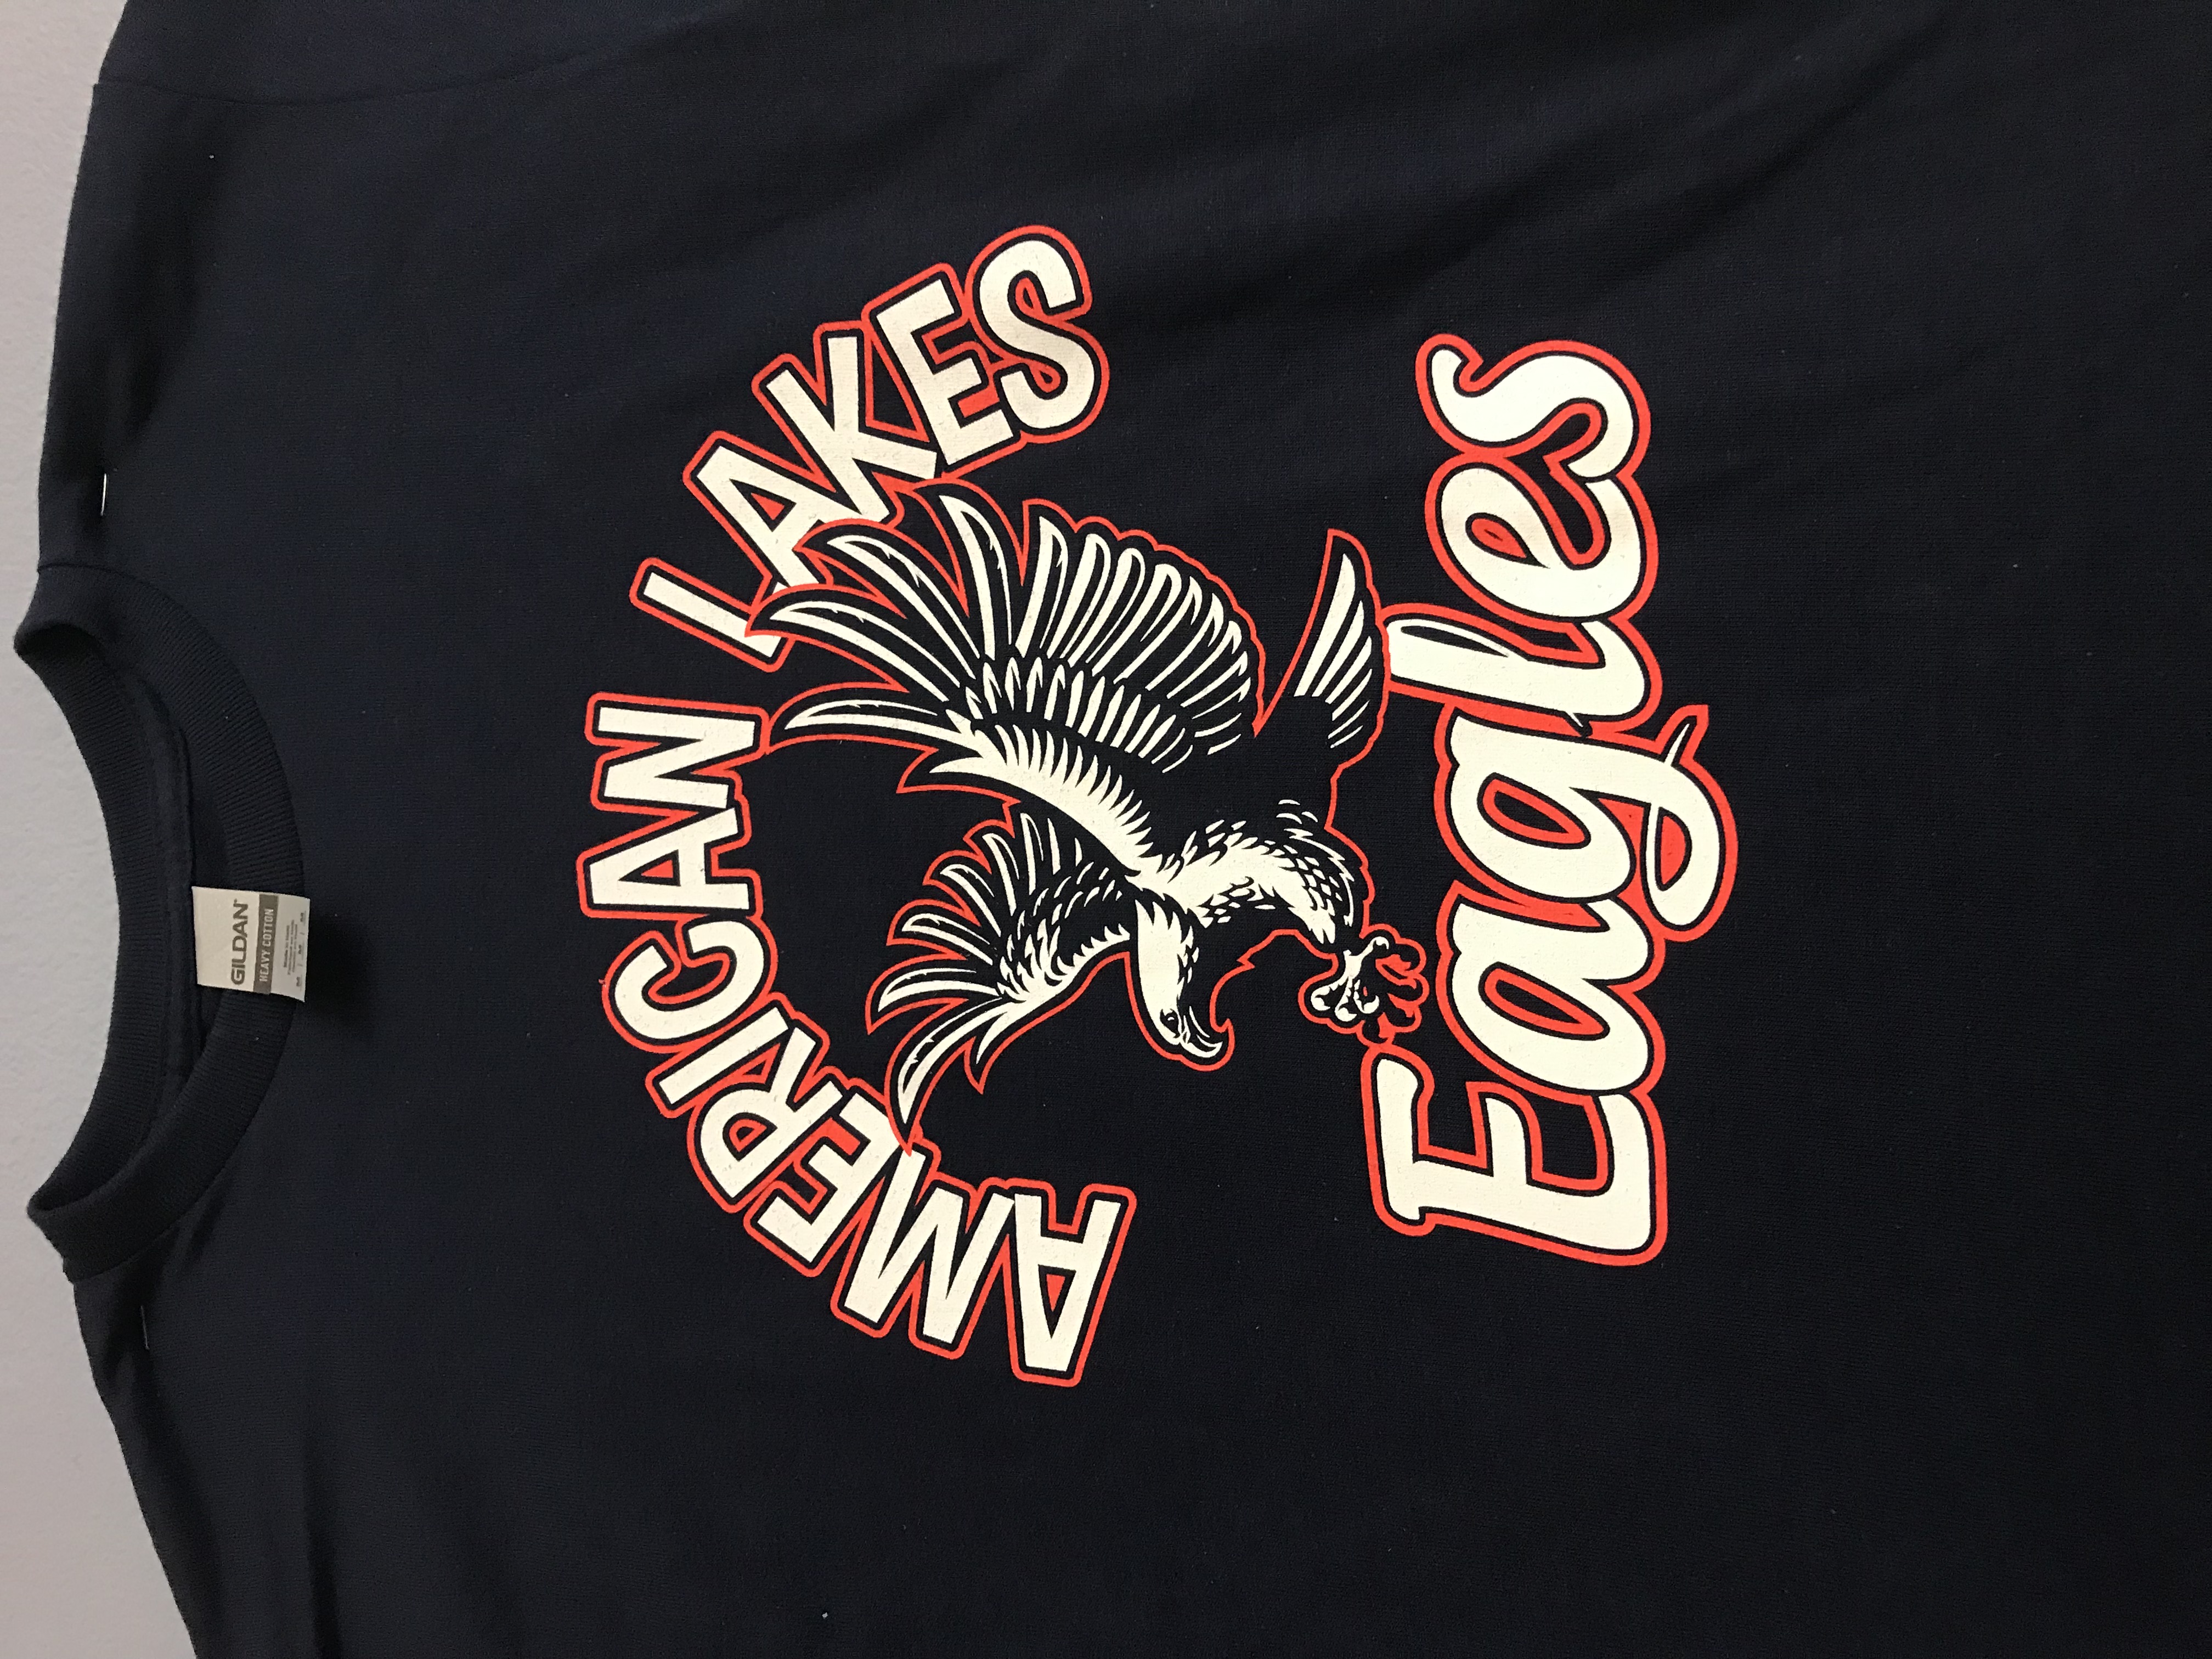 American Lakes School Eagles shirt